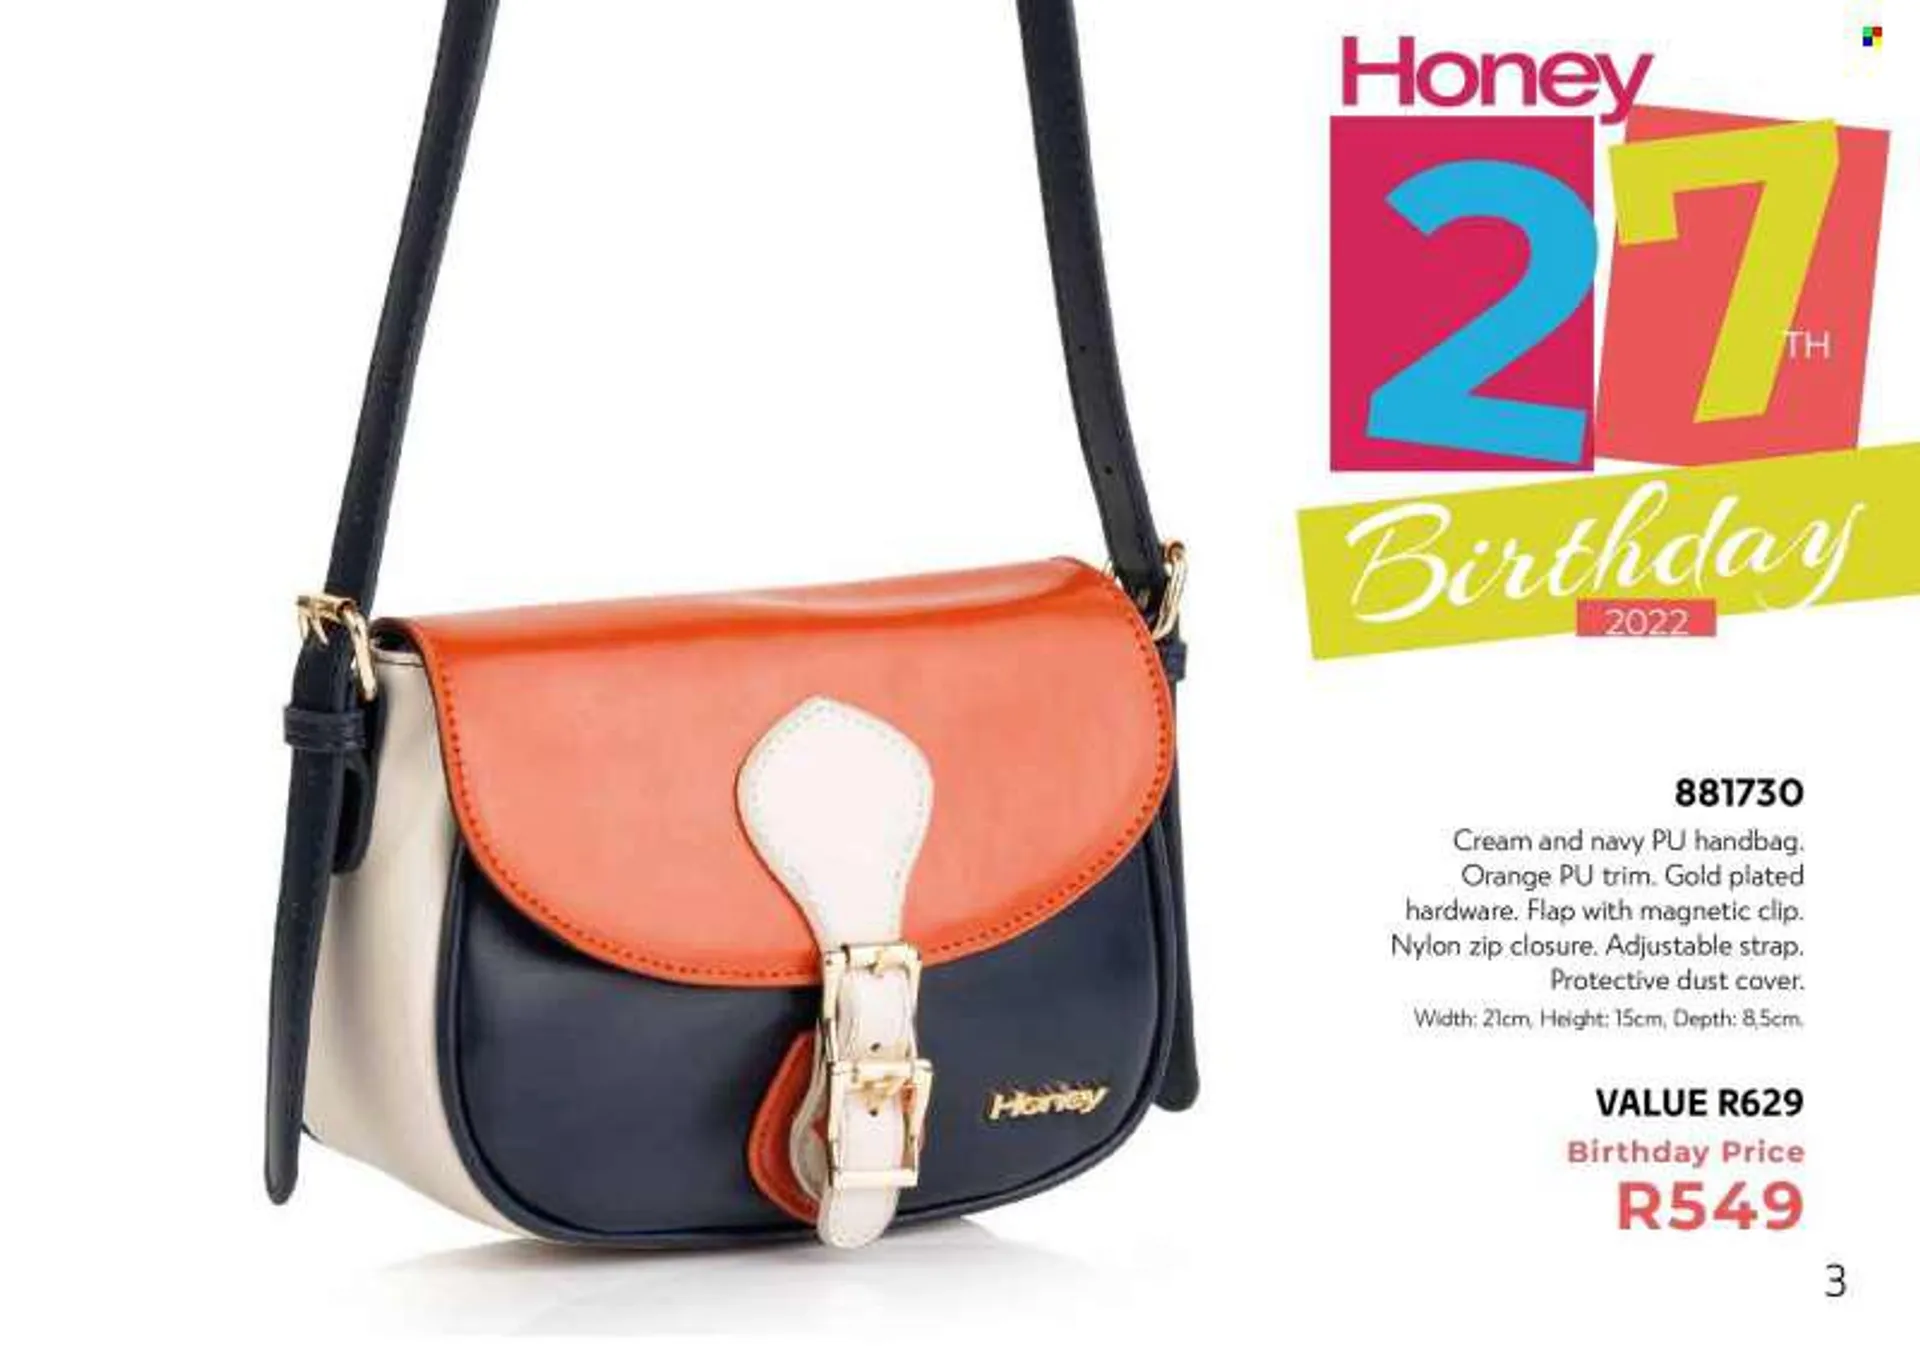 Honey catalogue  - Sales products - handbag. Page 5.